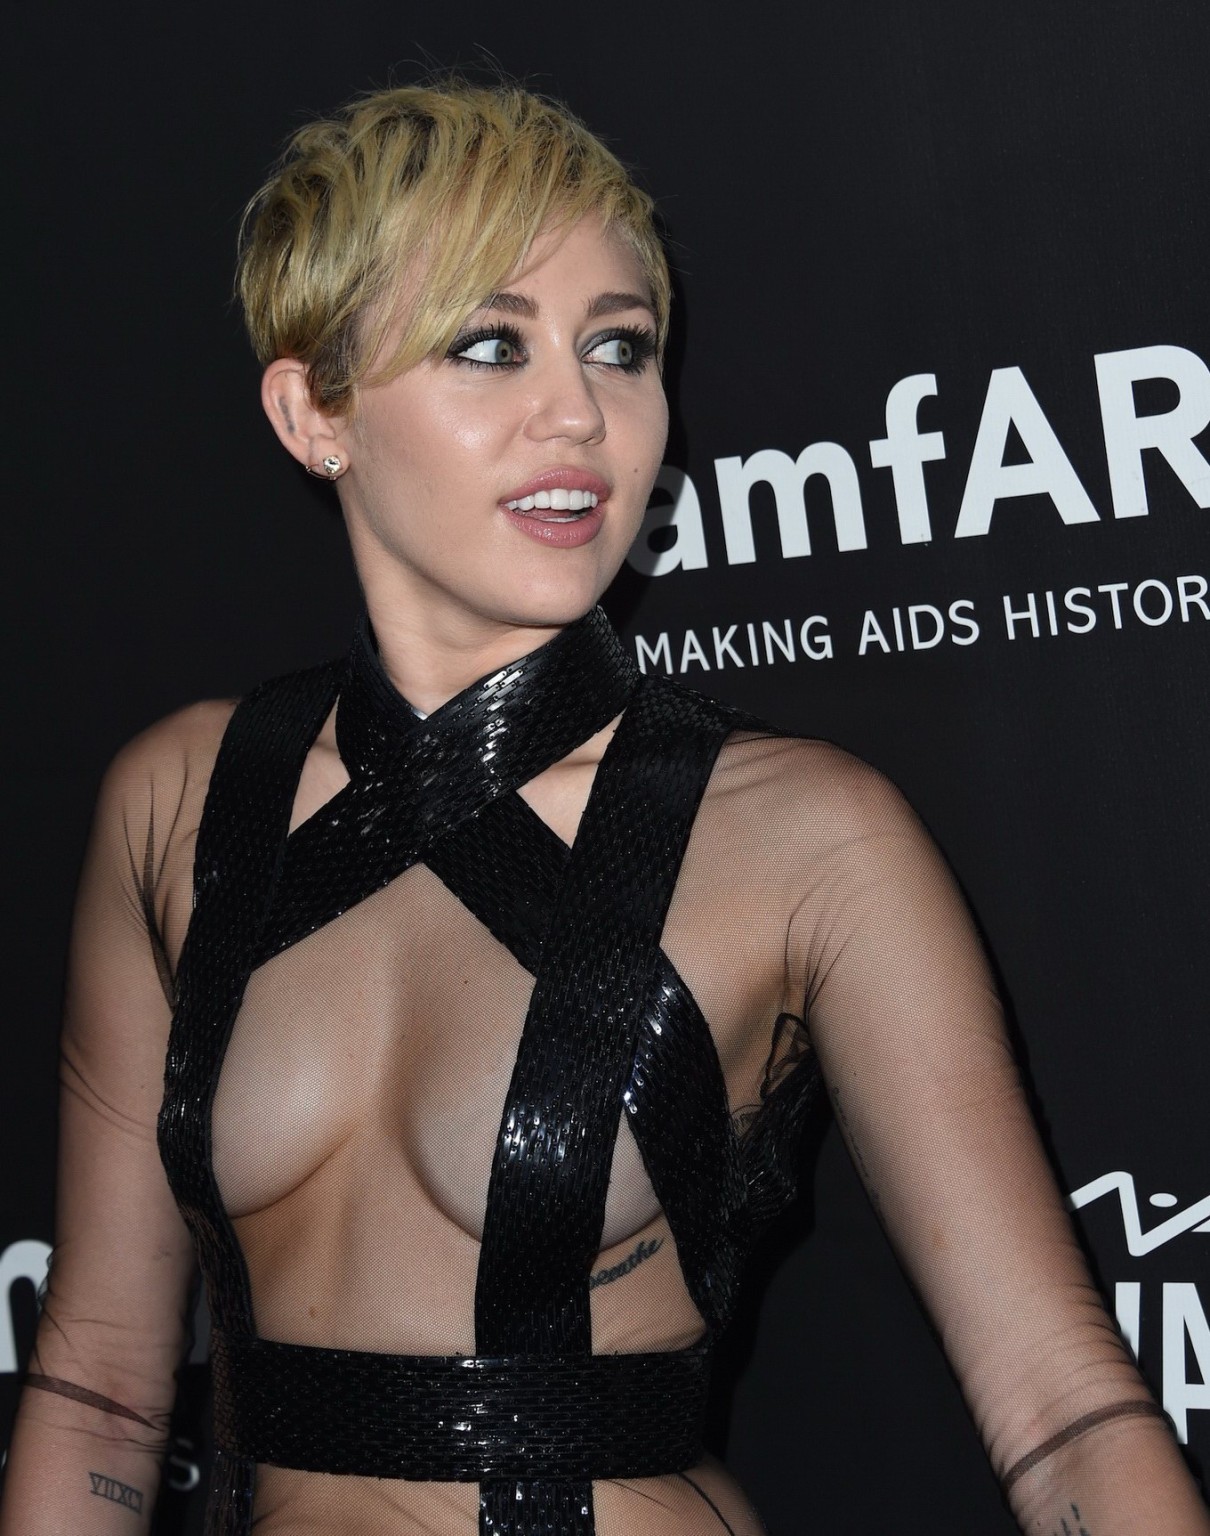 Miley cyrus seethru abdeckung nur brustwarzen bei amfar la inspiration 2014 gala in h
 #75182755